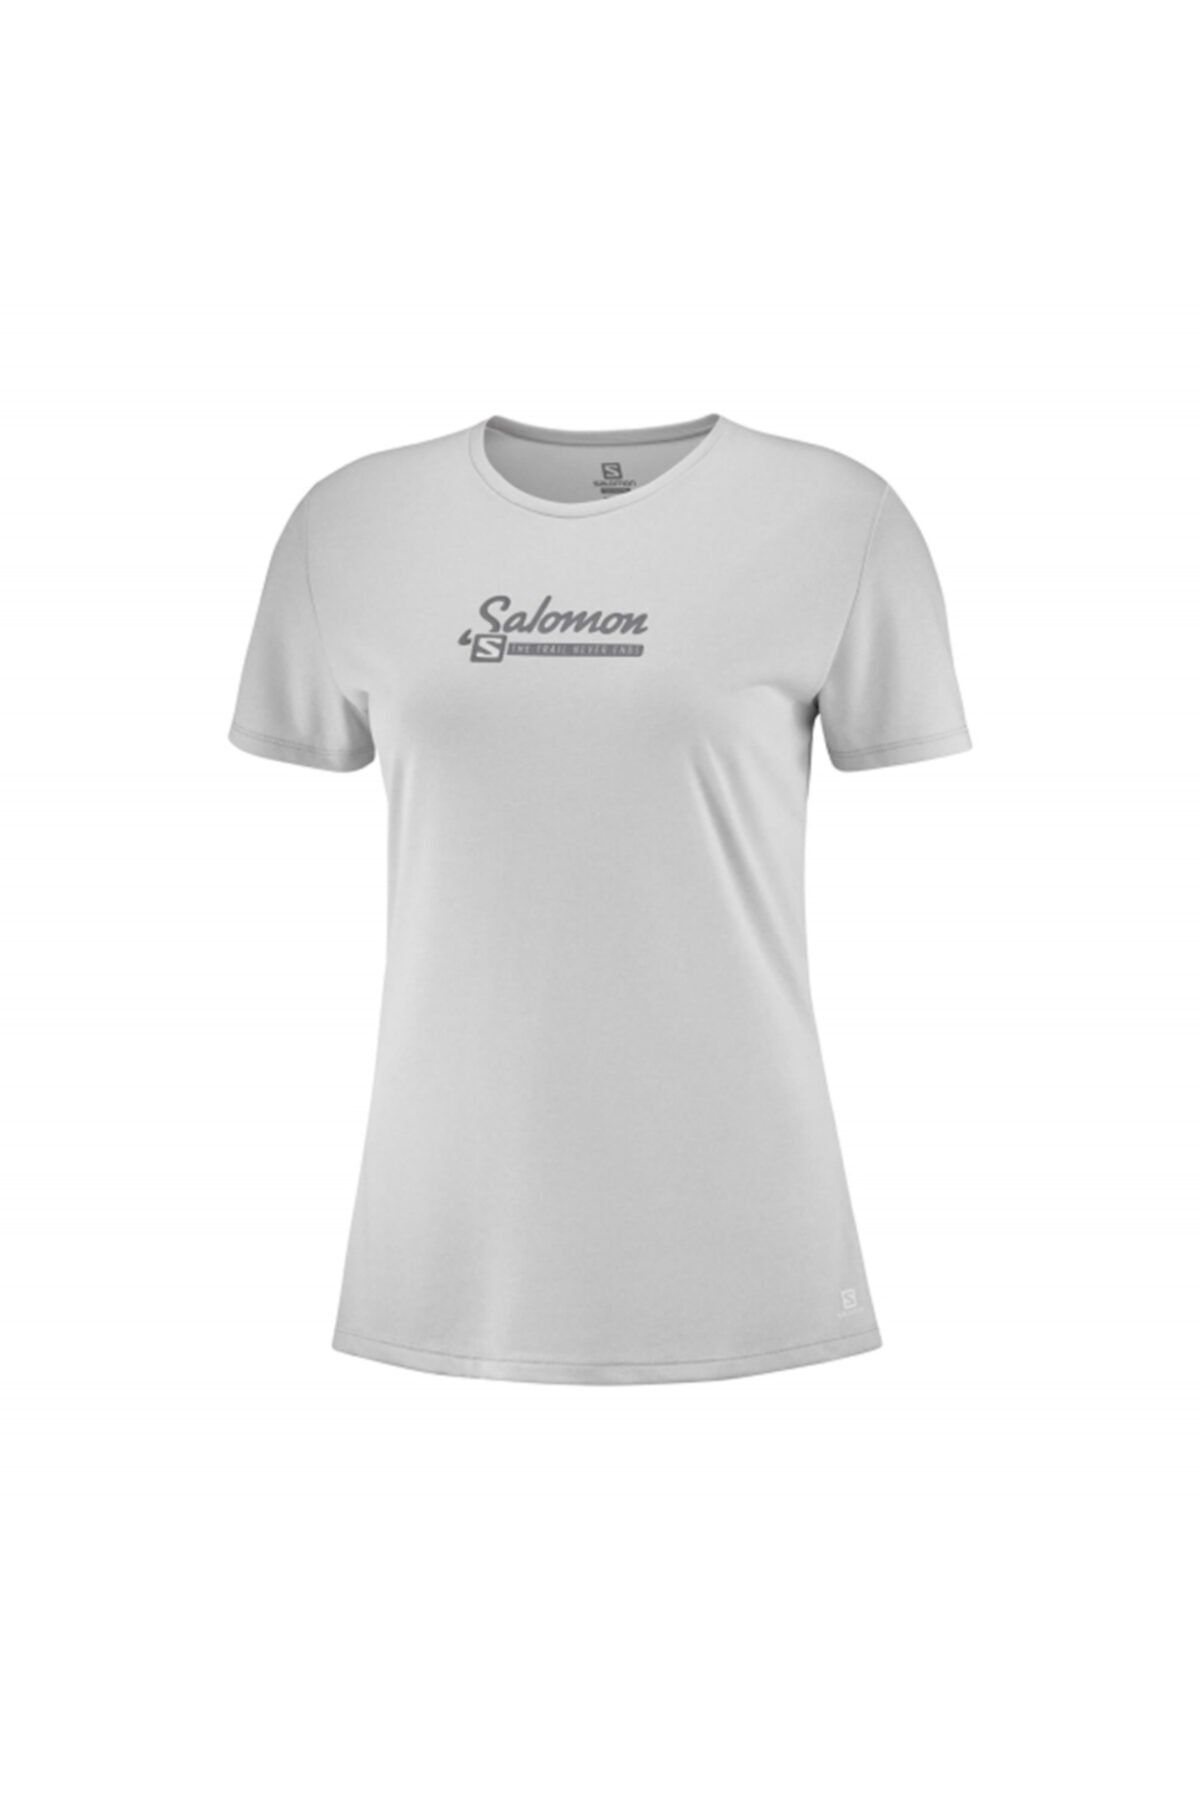 Salomon Comet Classic Tee W Kadın T-shirt Lc1278400